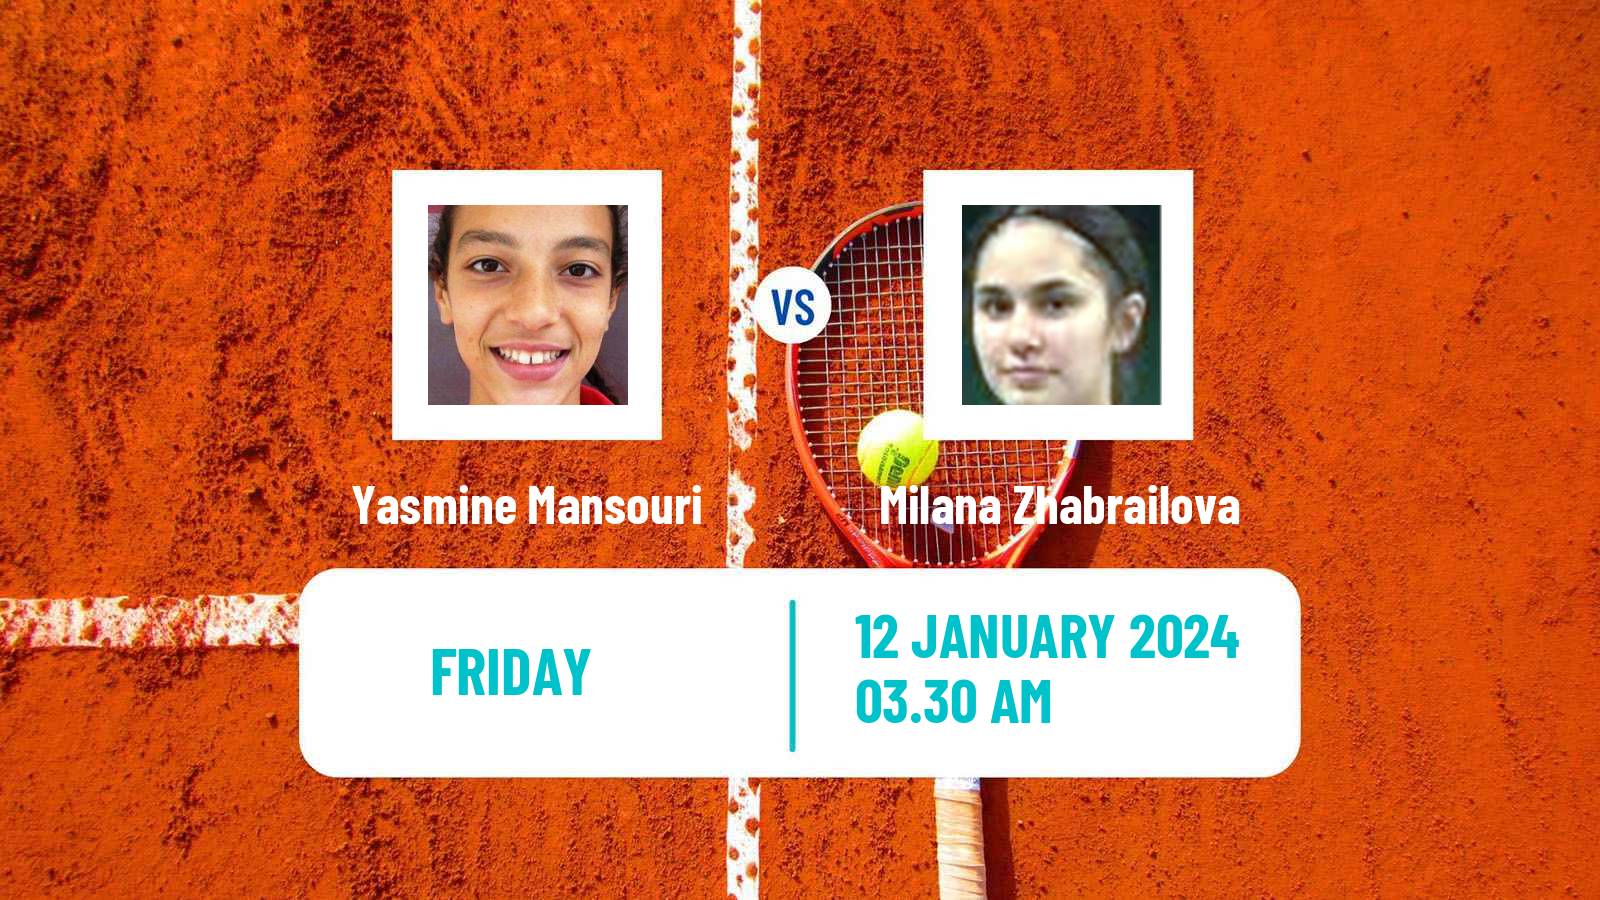 Tennis ITF W15 Monastir 2 Women Yasmine Mansouri - Milana Zhabrailova